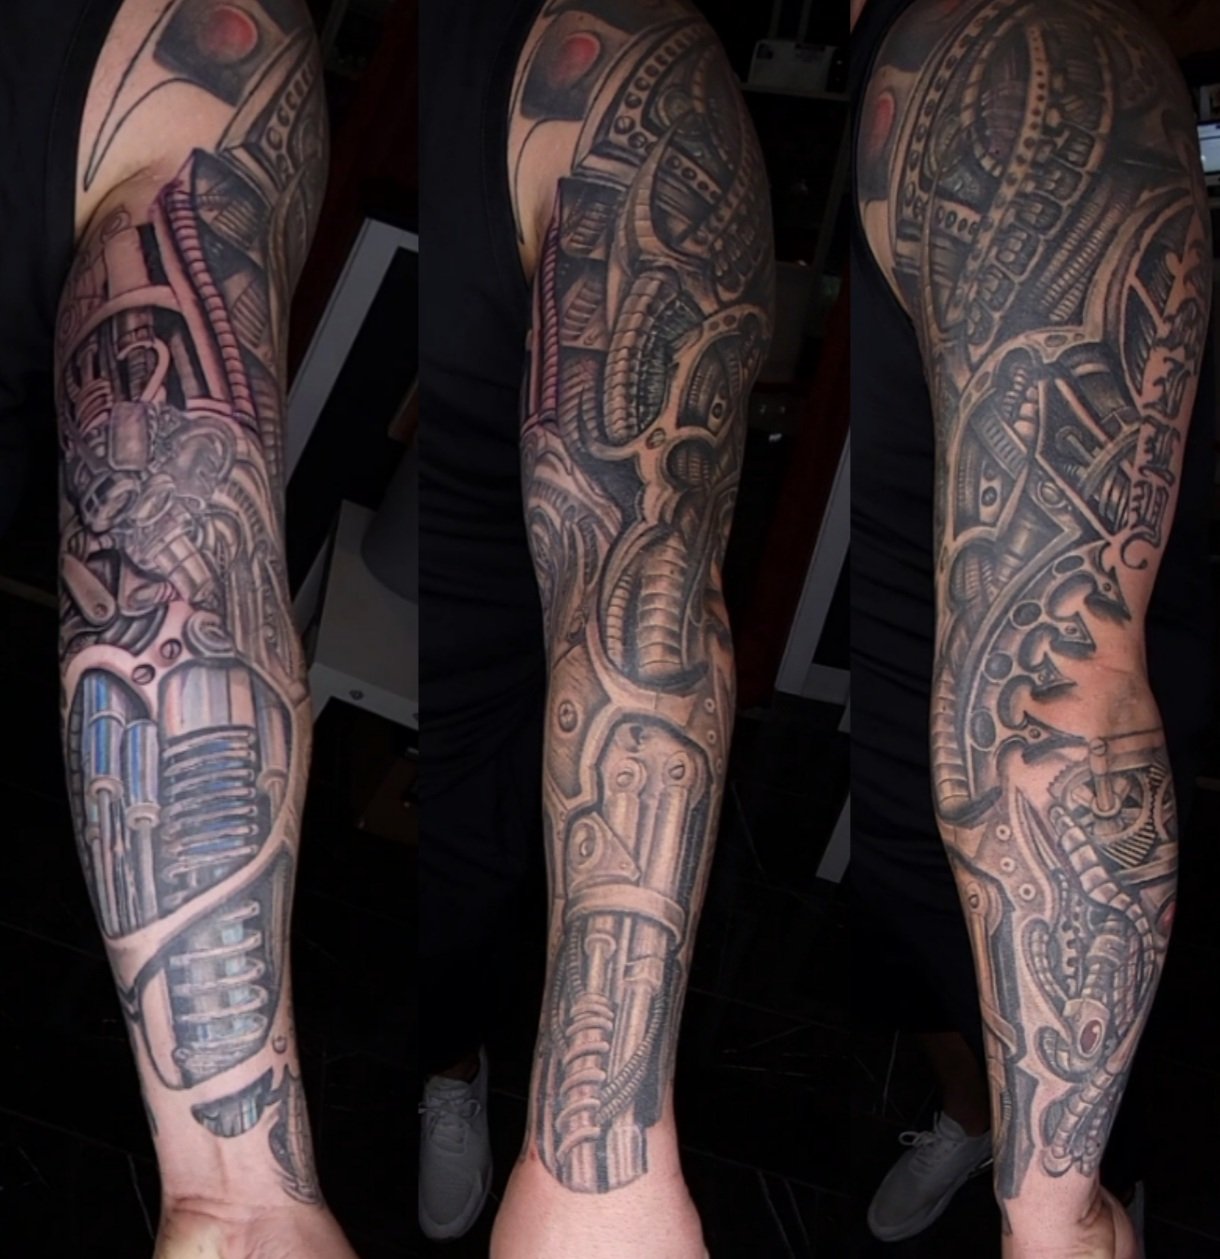 Chicago Ink Tattoo & Body PiercingChicago Ink Tattoo & Body Piercing and microdermals